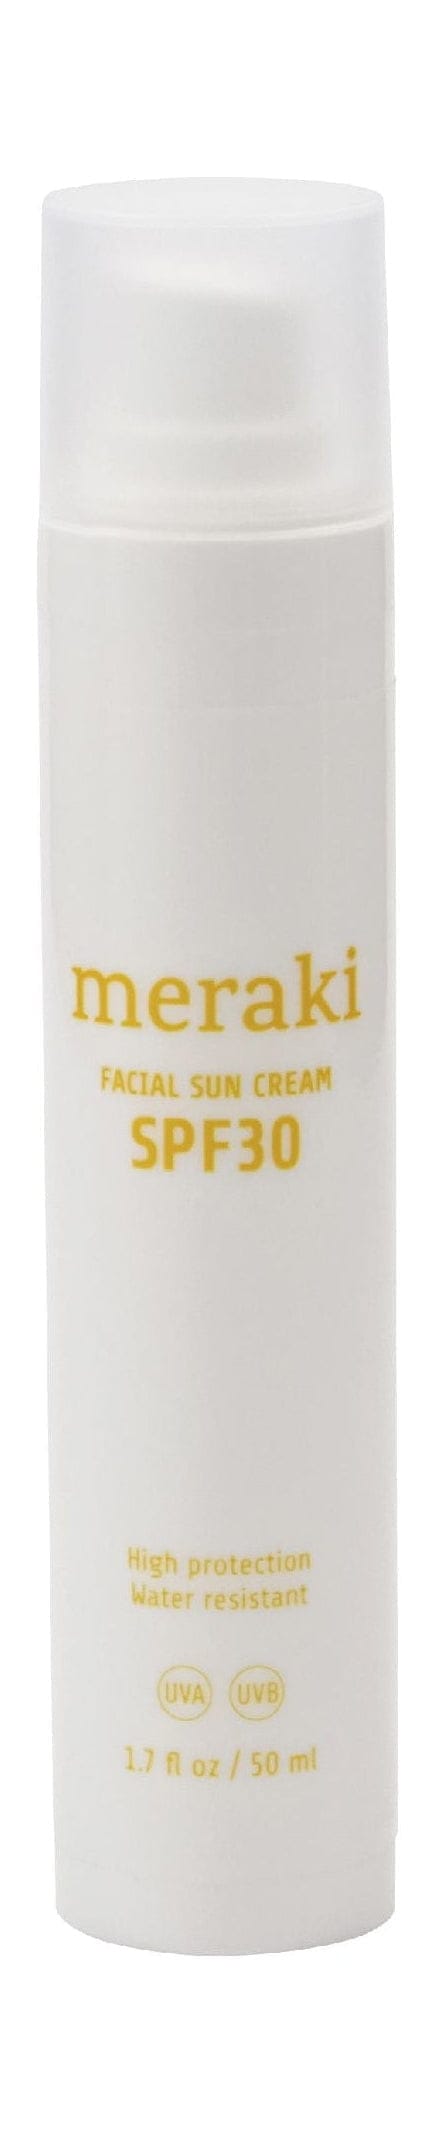 Meraki Facial Sun Cream 50 ml, mildilega ilmandi